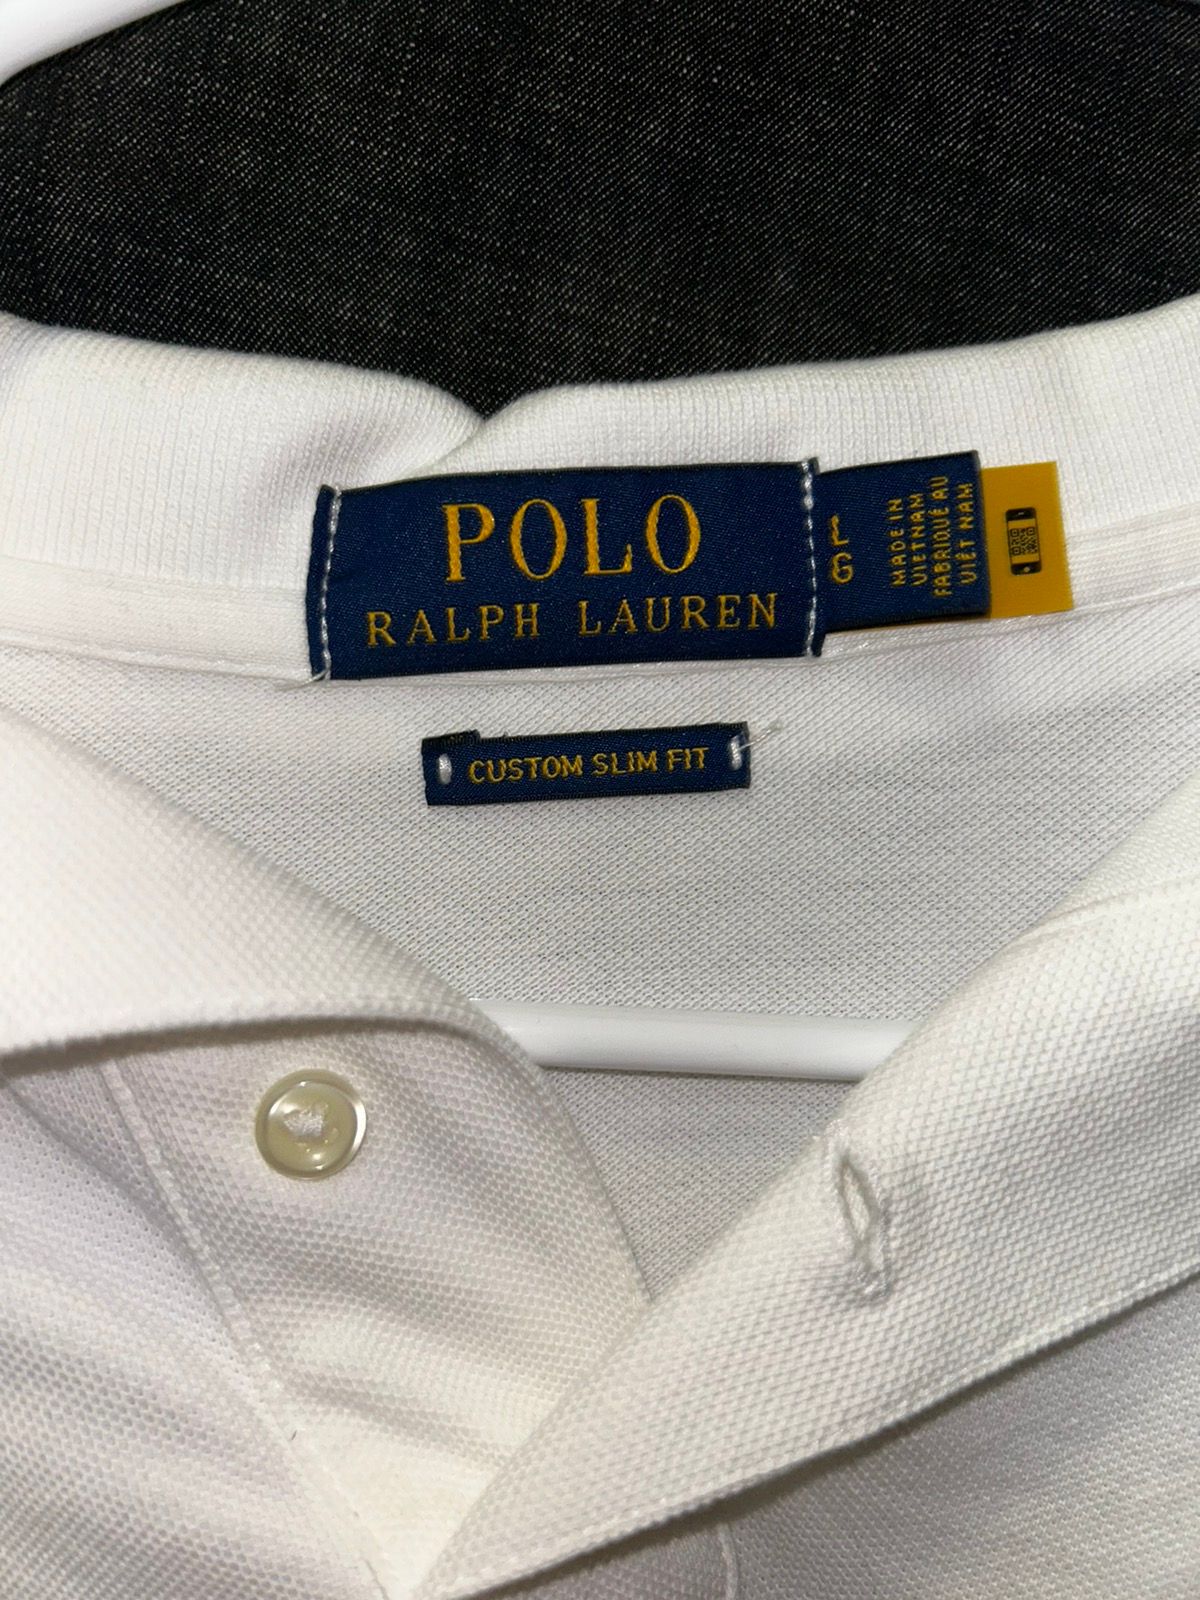 Polo Ralph Lauren Polo Ralph Lauren Polo Bear Polo Size US L / EU 52-54 / 3 - 2 Preview